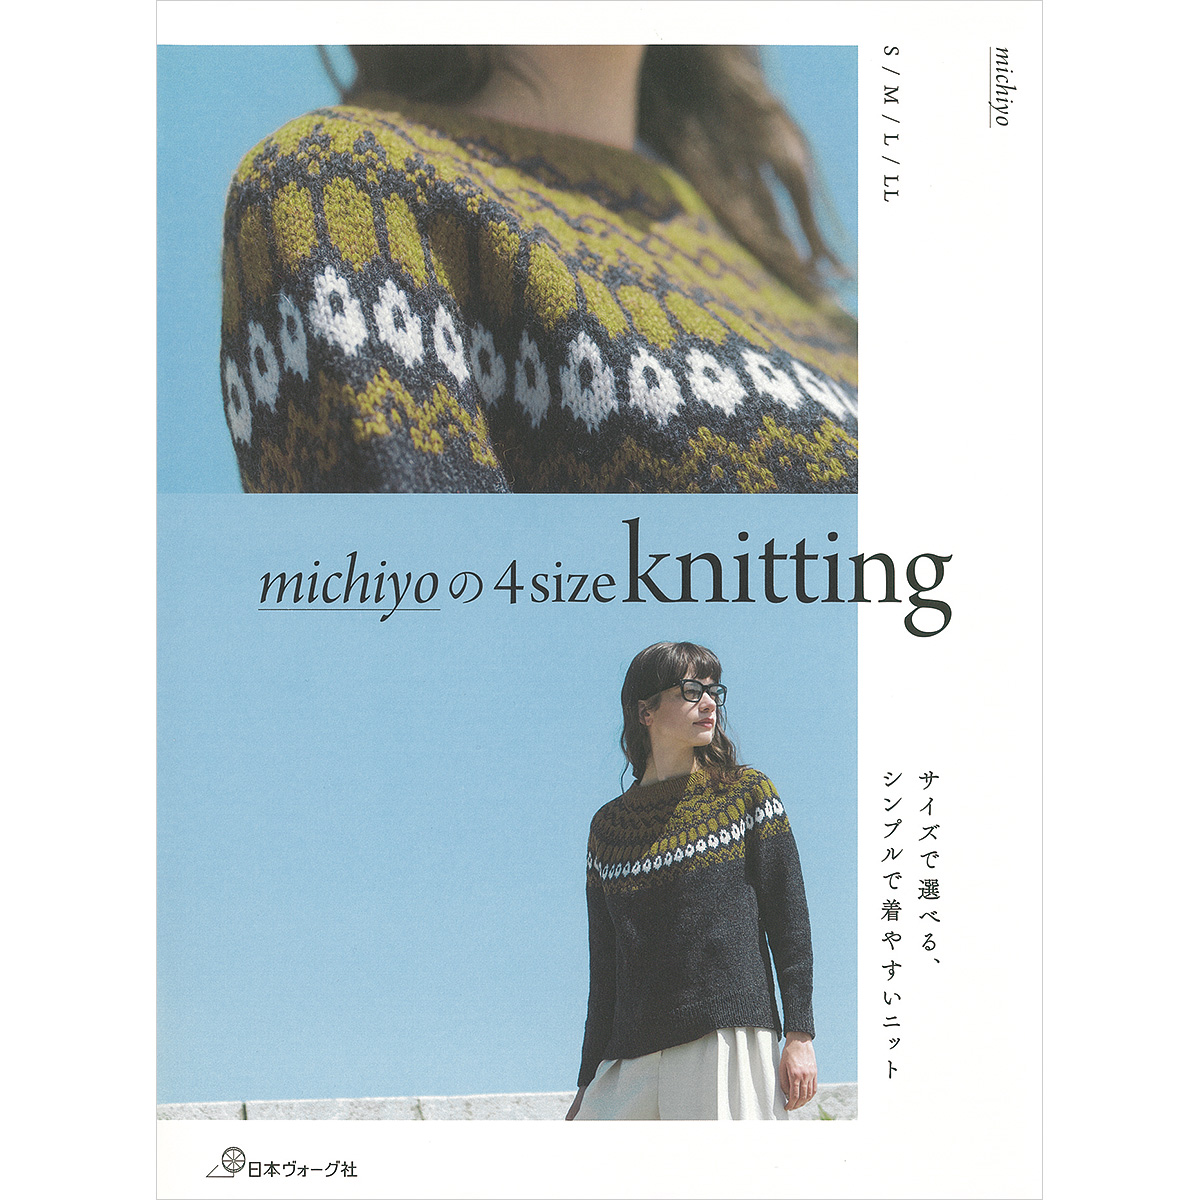 michiyoの4size knitting　サイズで選べる、シンプルで着やすいニット